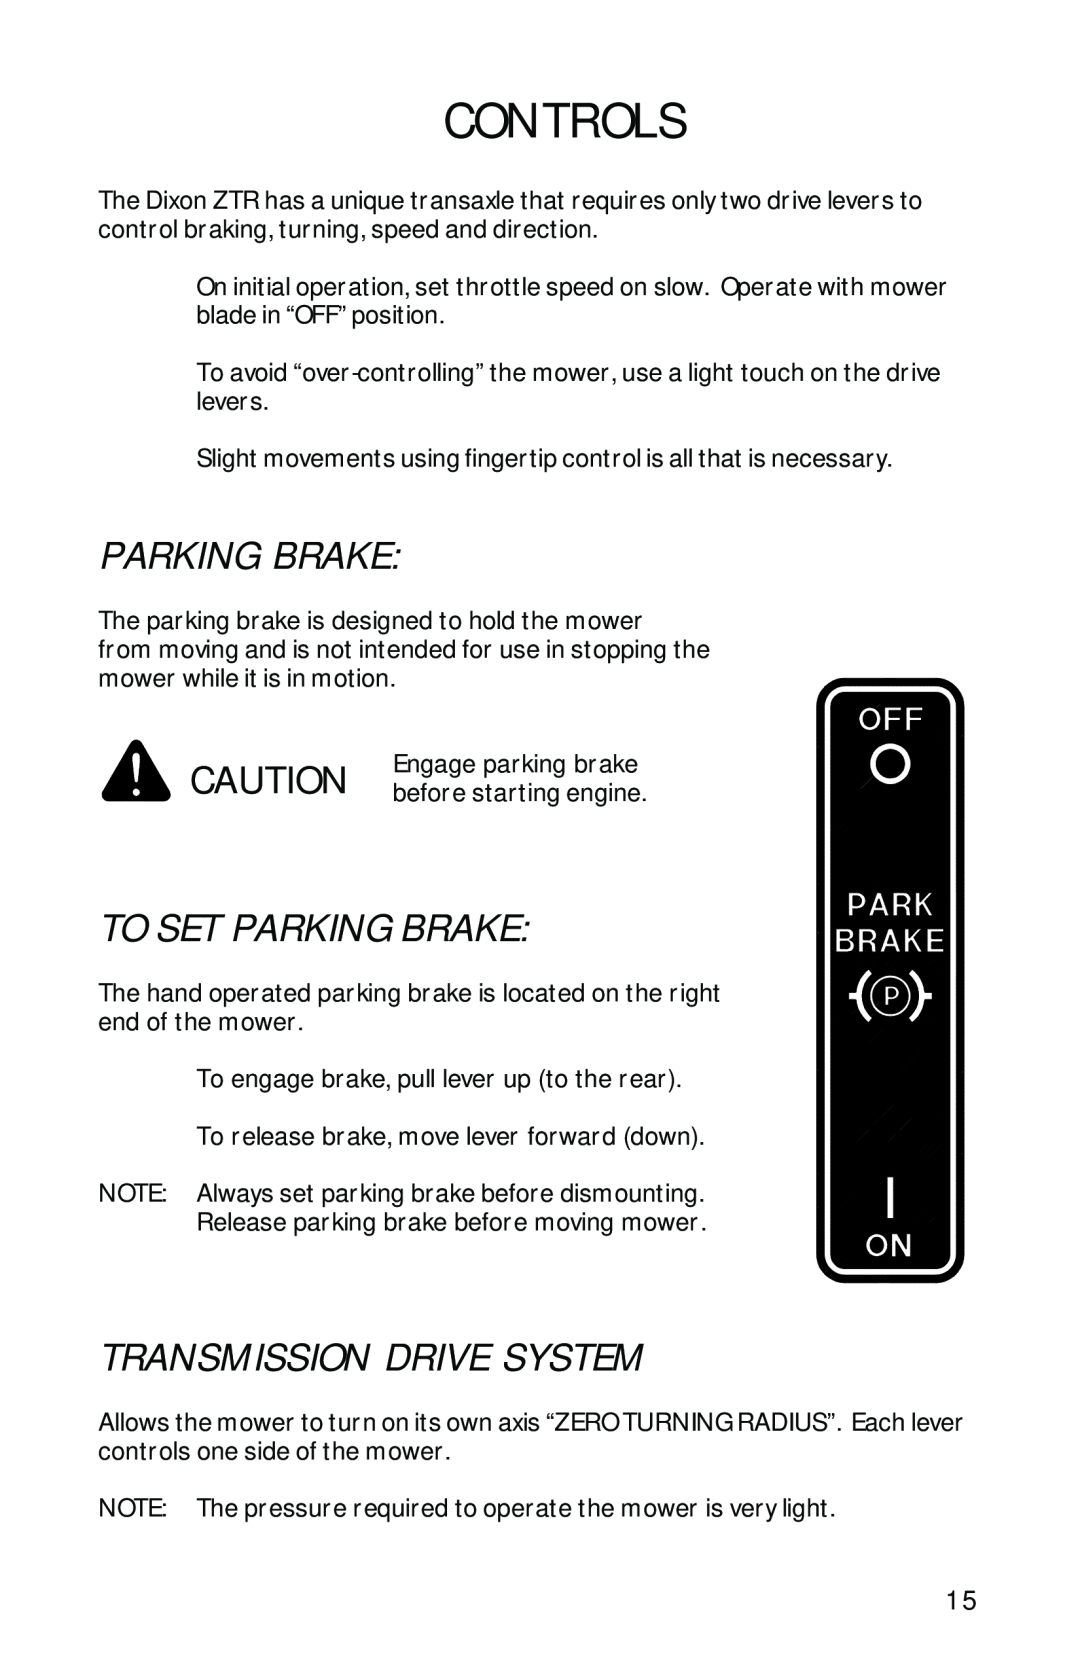 Dixon ZTR 2002 manual Controls, To Set Parking Brake, Transmission Drive System 